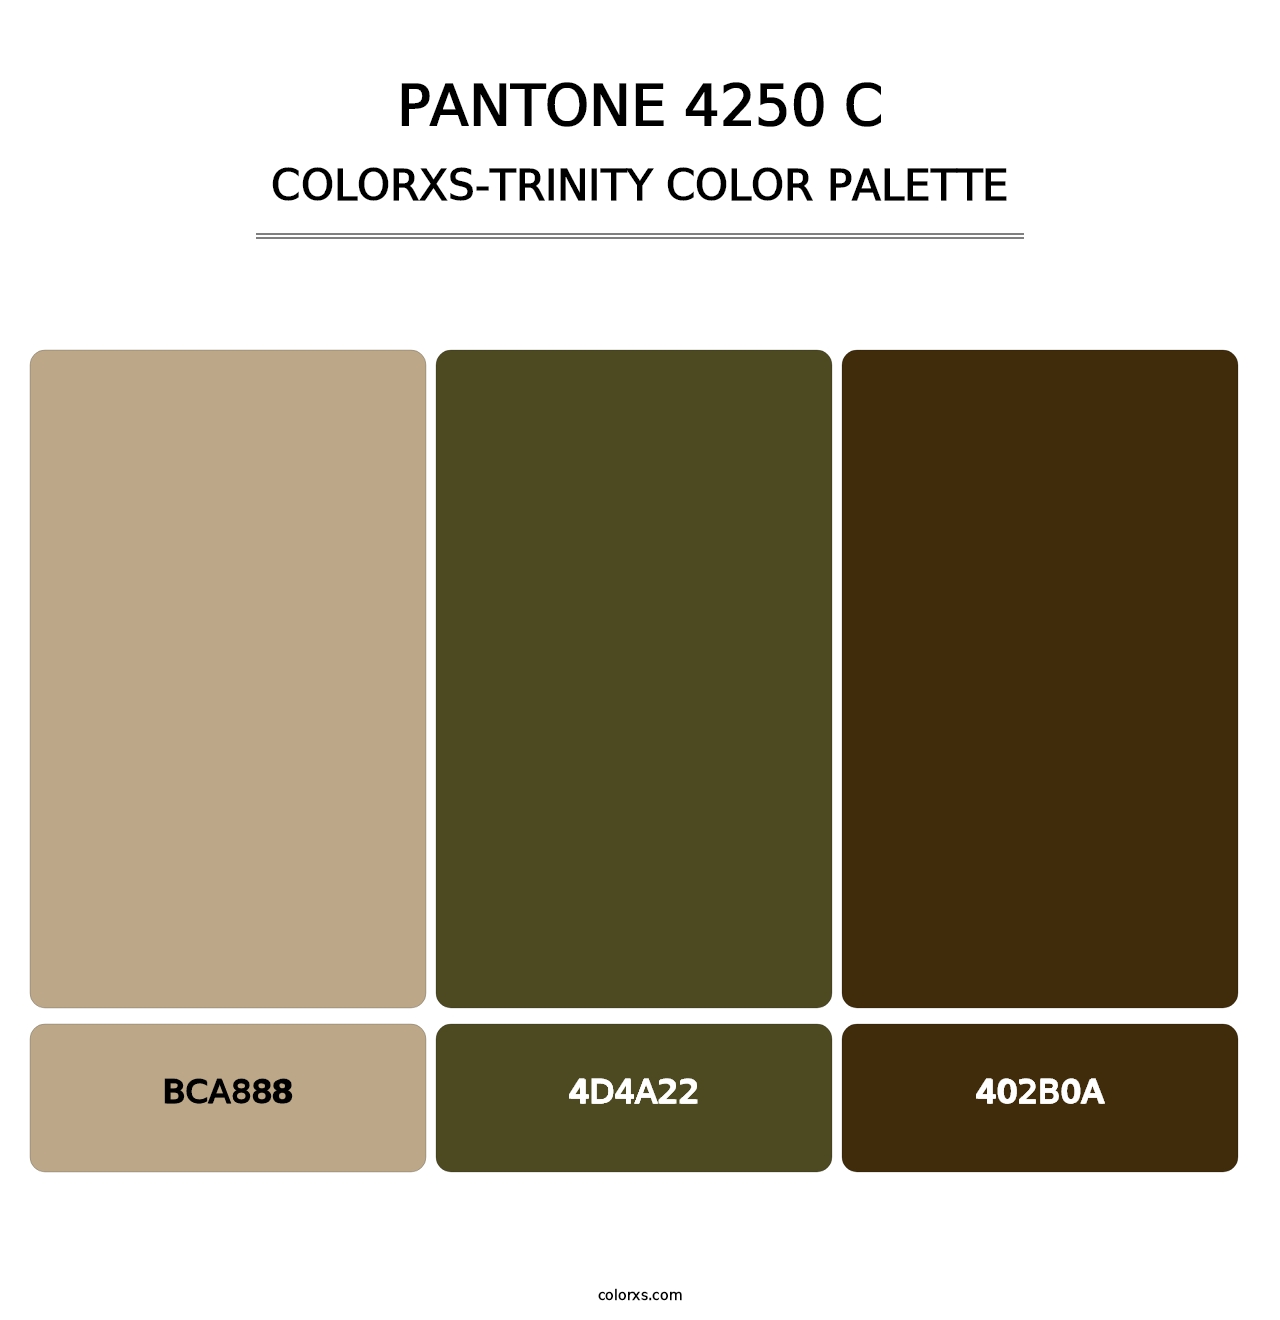 PANTONE 4250 C - Colorxs Trinity Palette